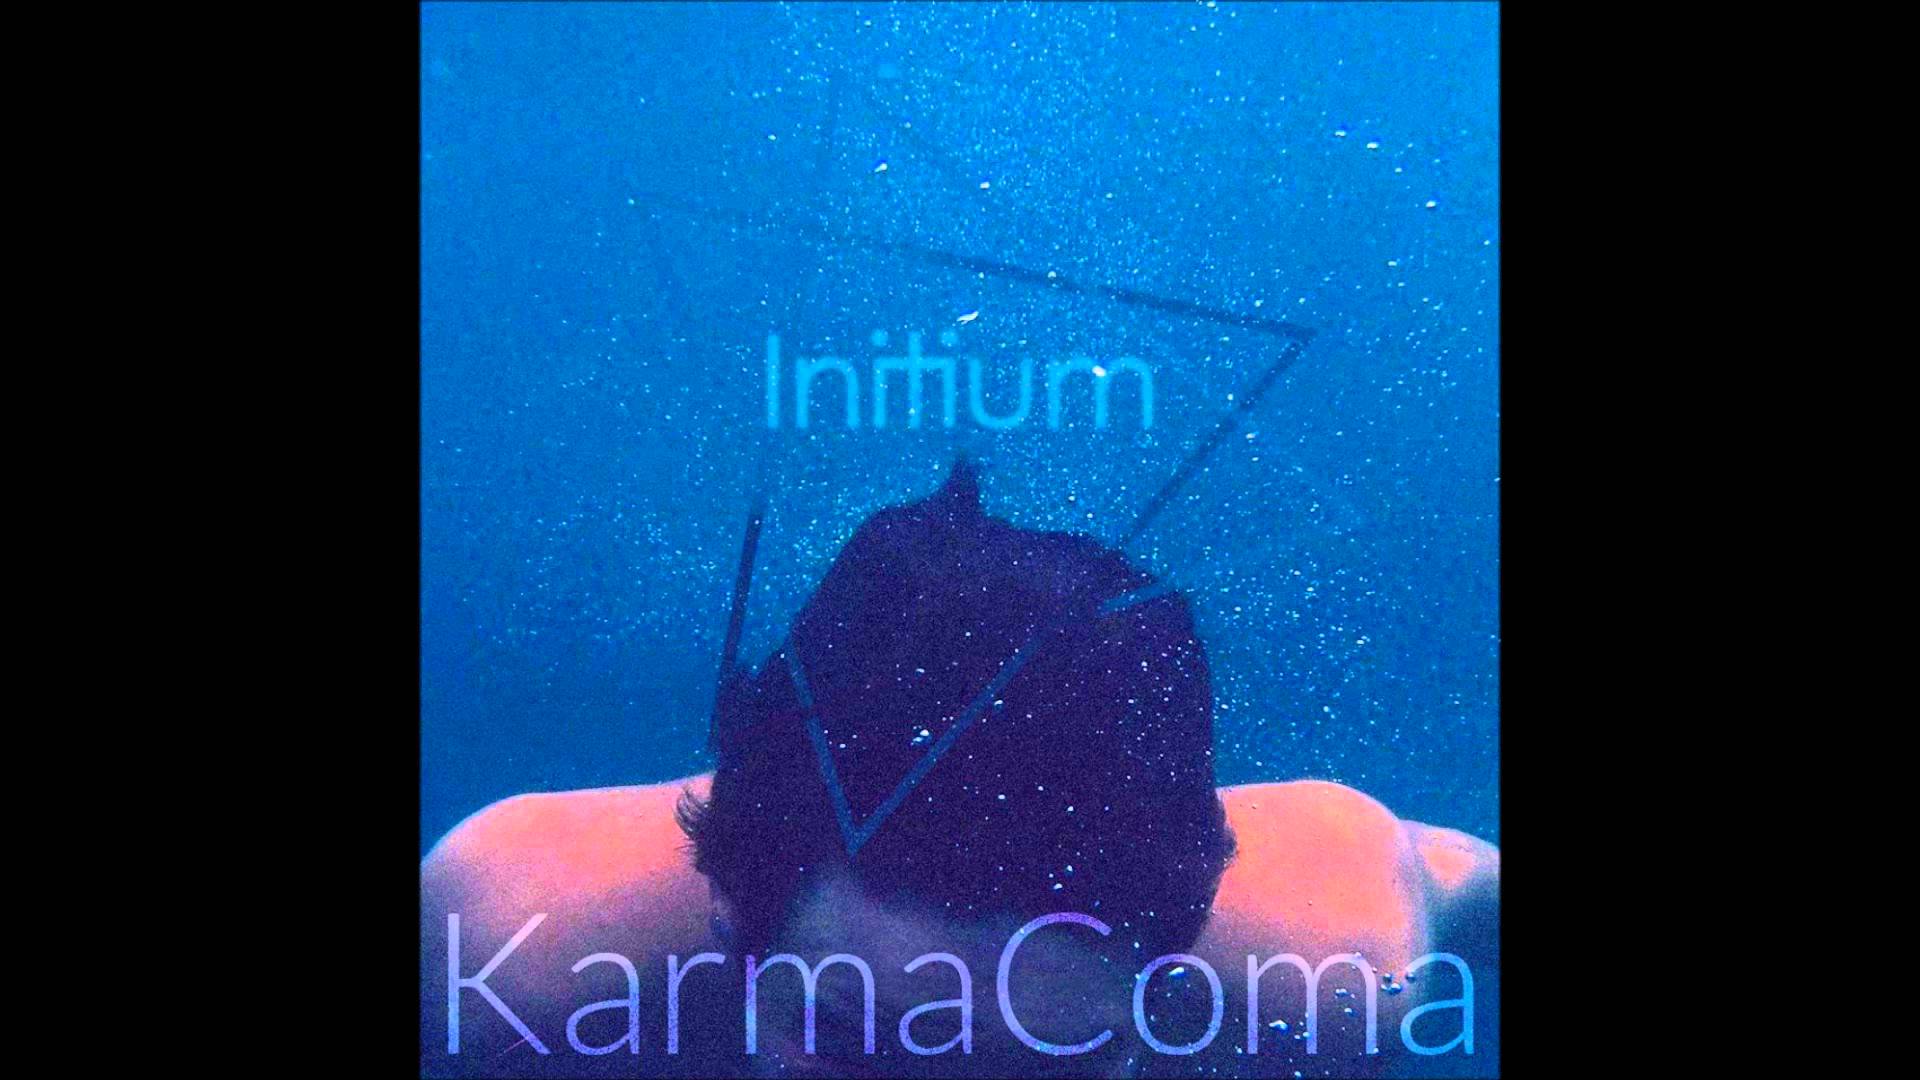 KarmaComa - Killing Me - YouTube